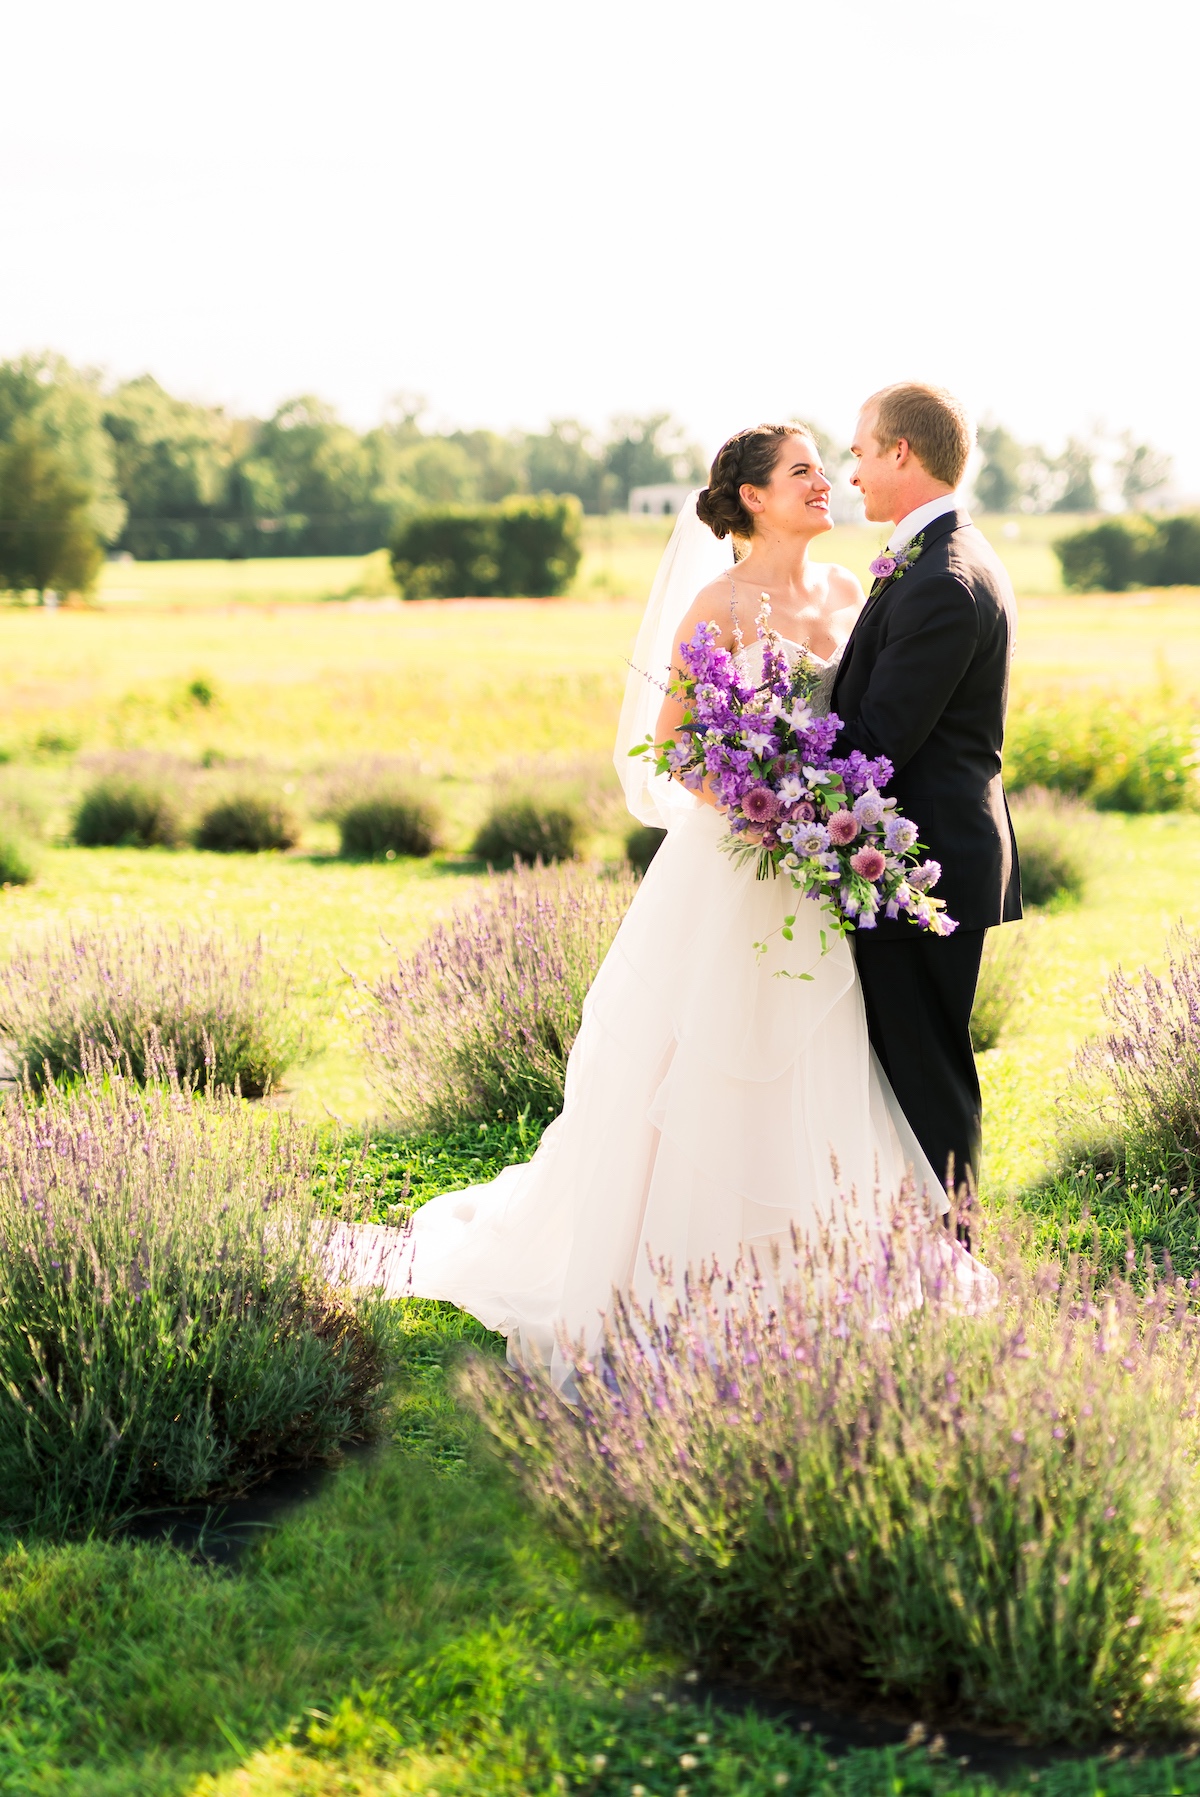 Lavender field wedding ideas